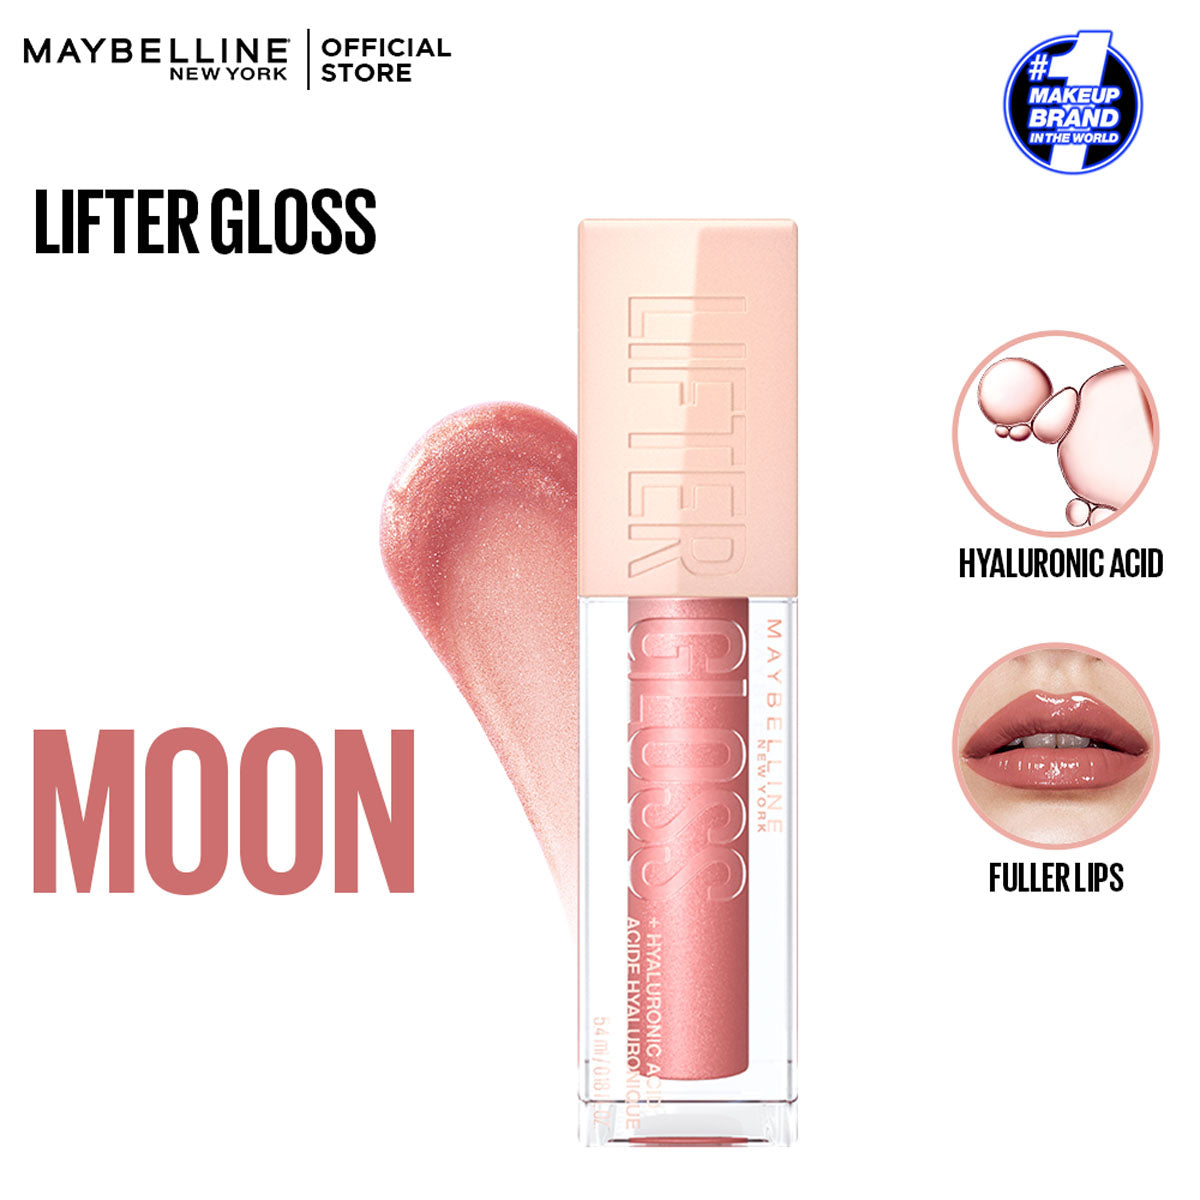 Maybelline - Lifter Gloss Hydrating Lip Gloss - 003 Moon